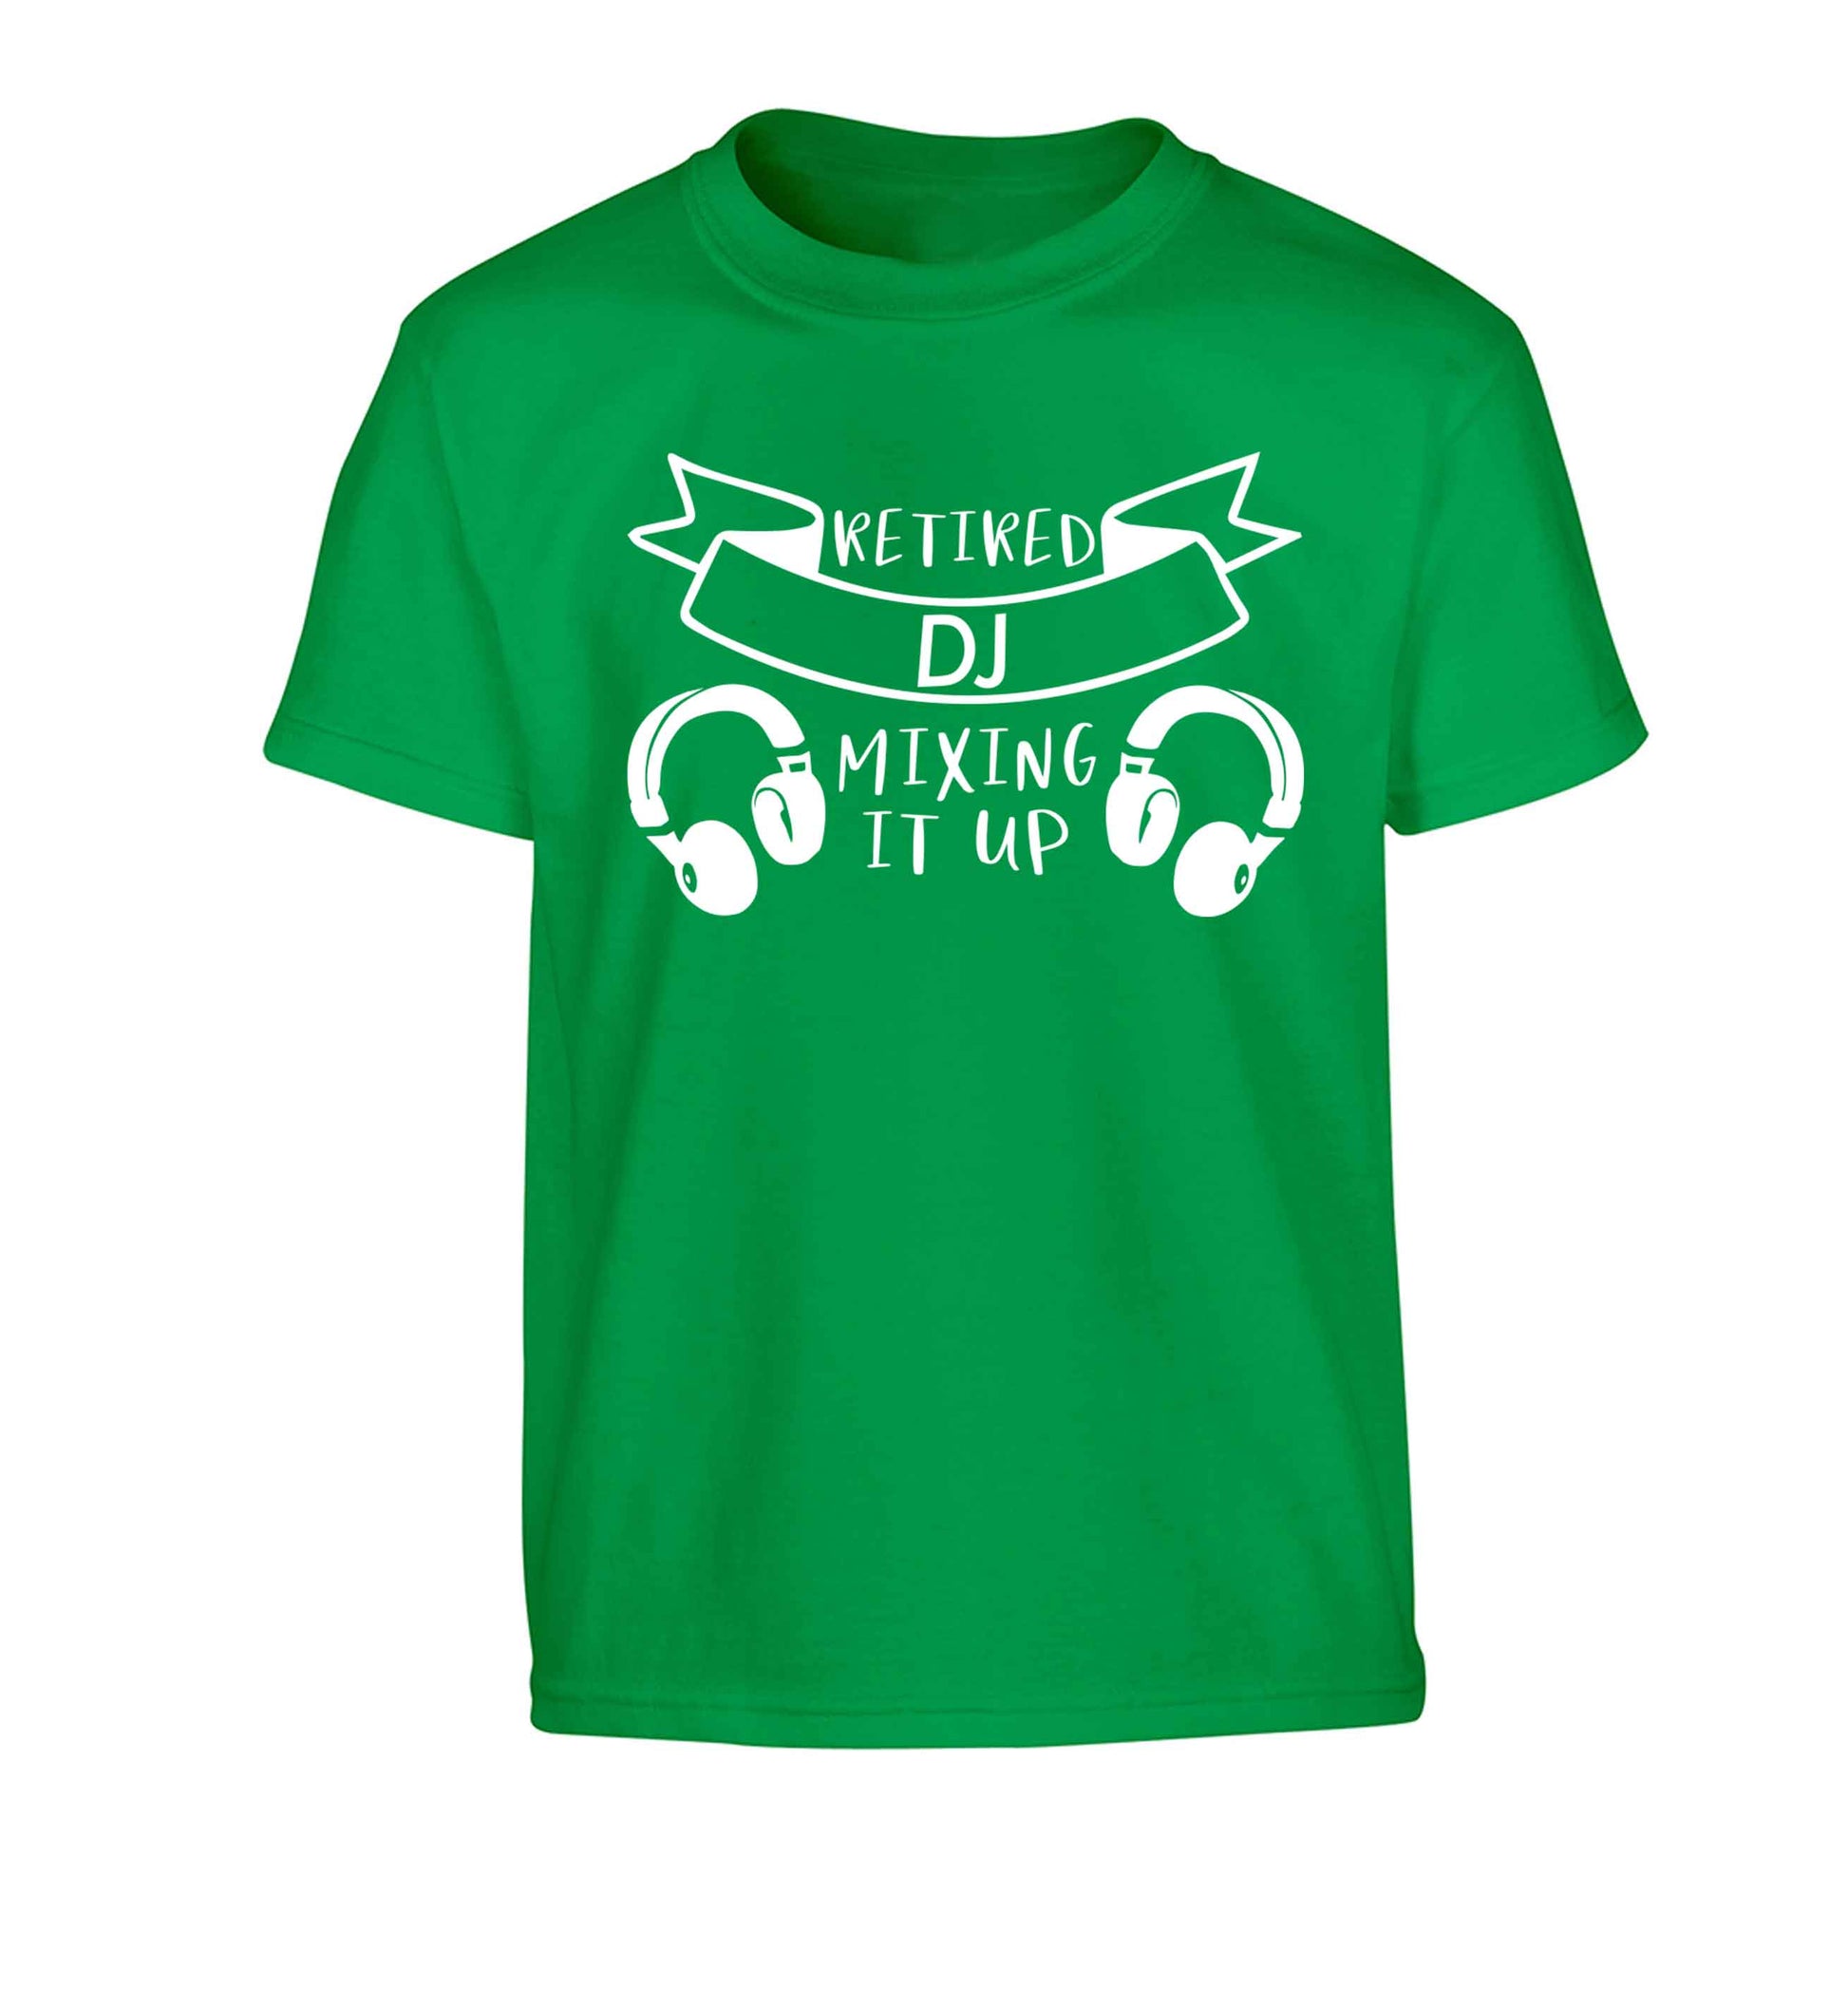 Retired DJ mixing it up Children's green Tshirt 12-13 Years